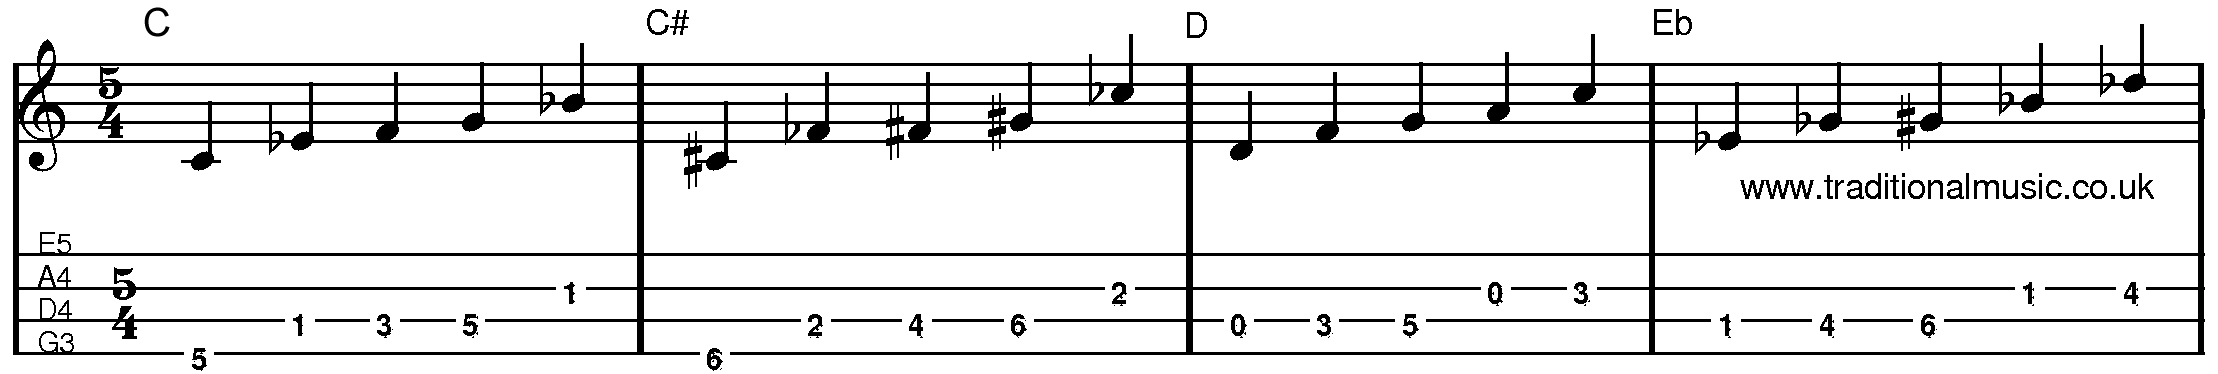 Minor Pentatonic Scales for Mandolin Ab to B